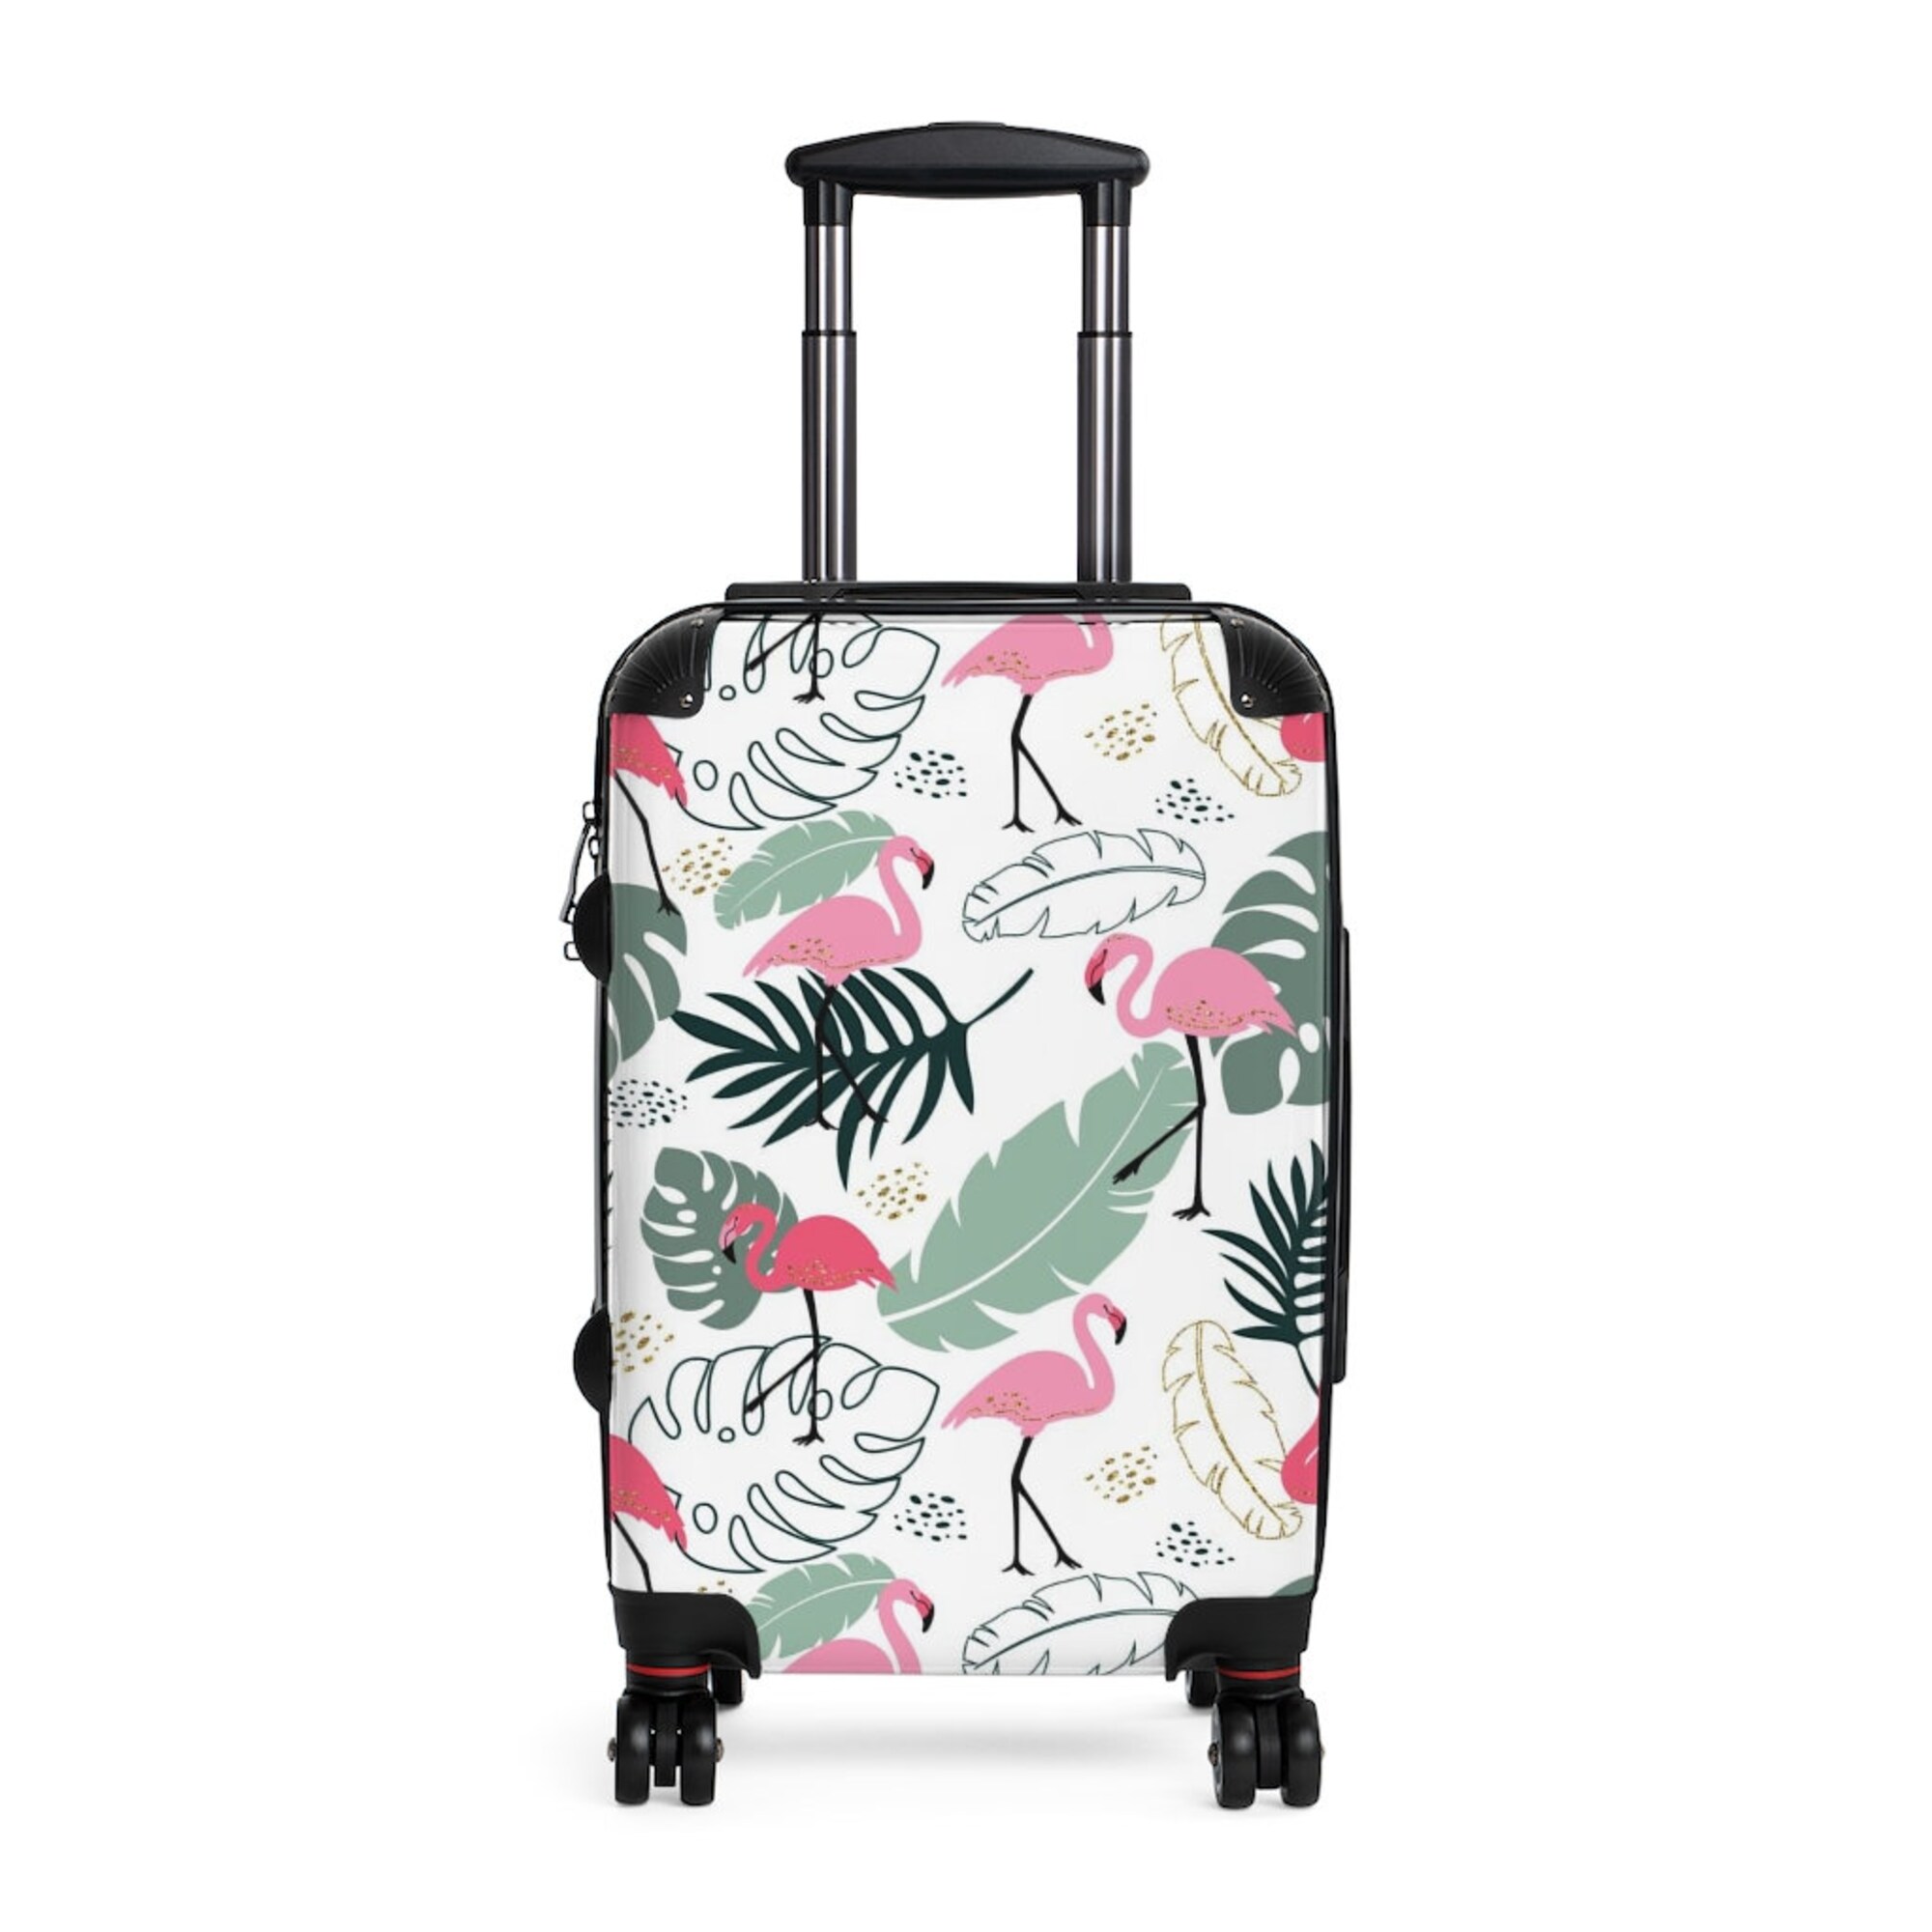 The Tropical Flamingo Suitcase